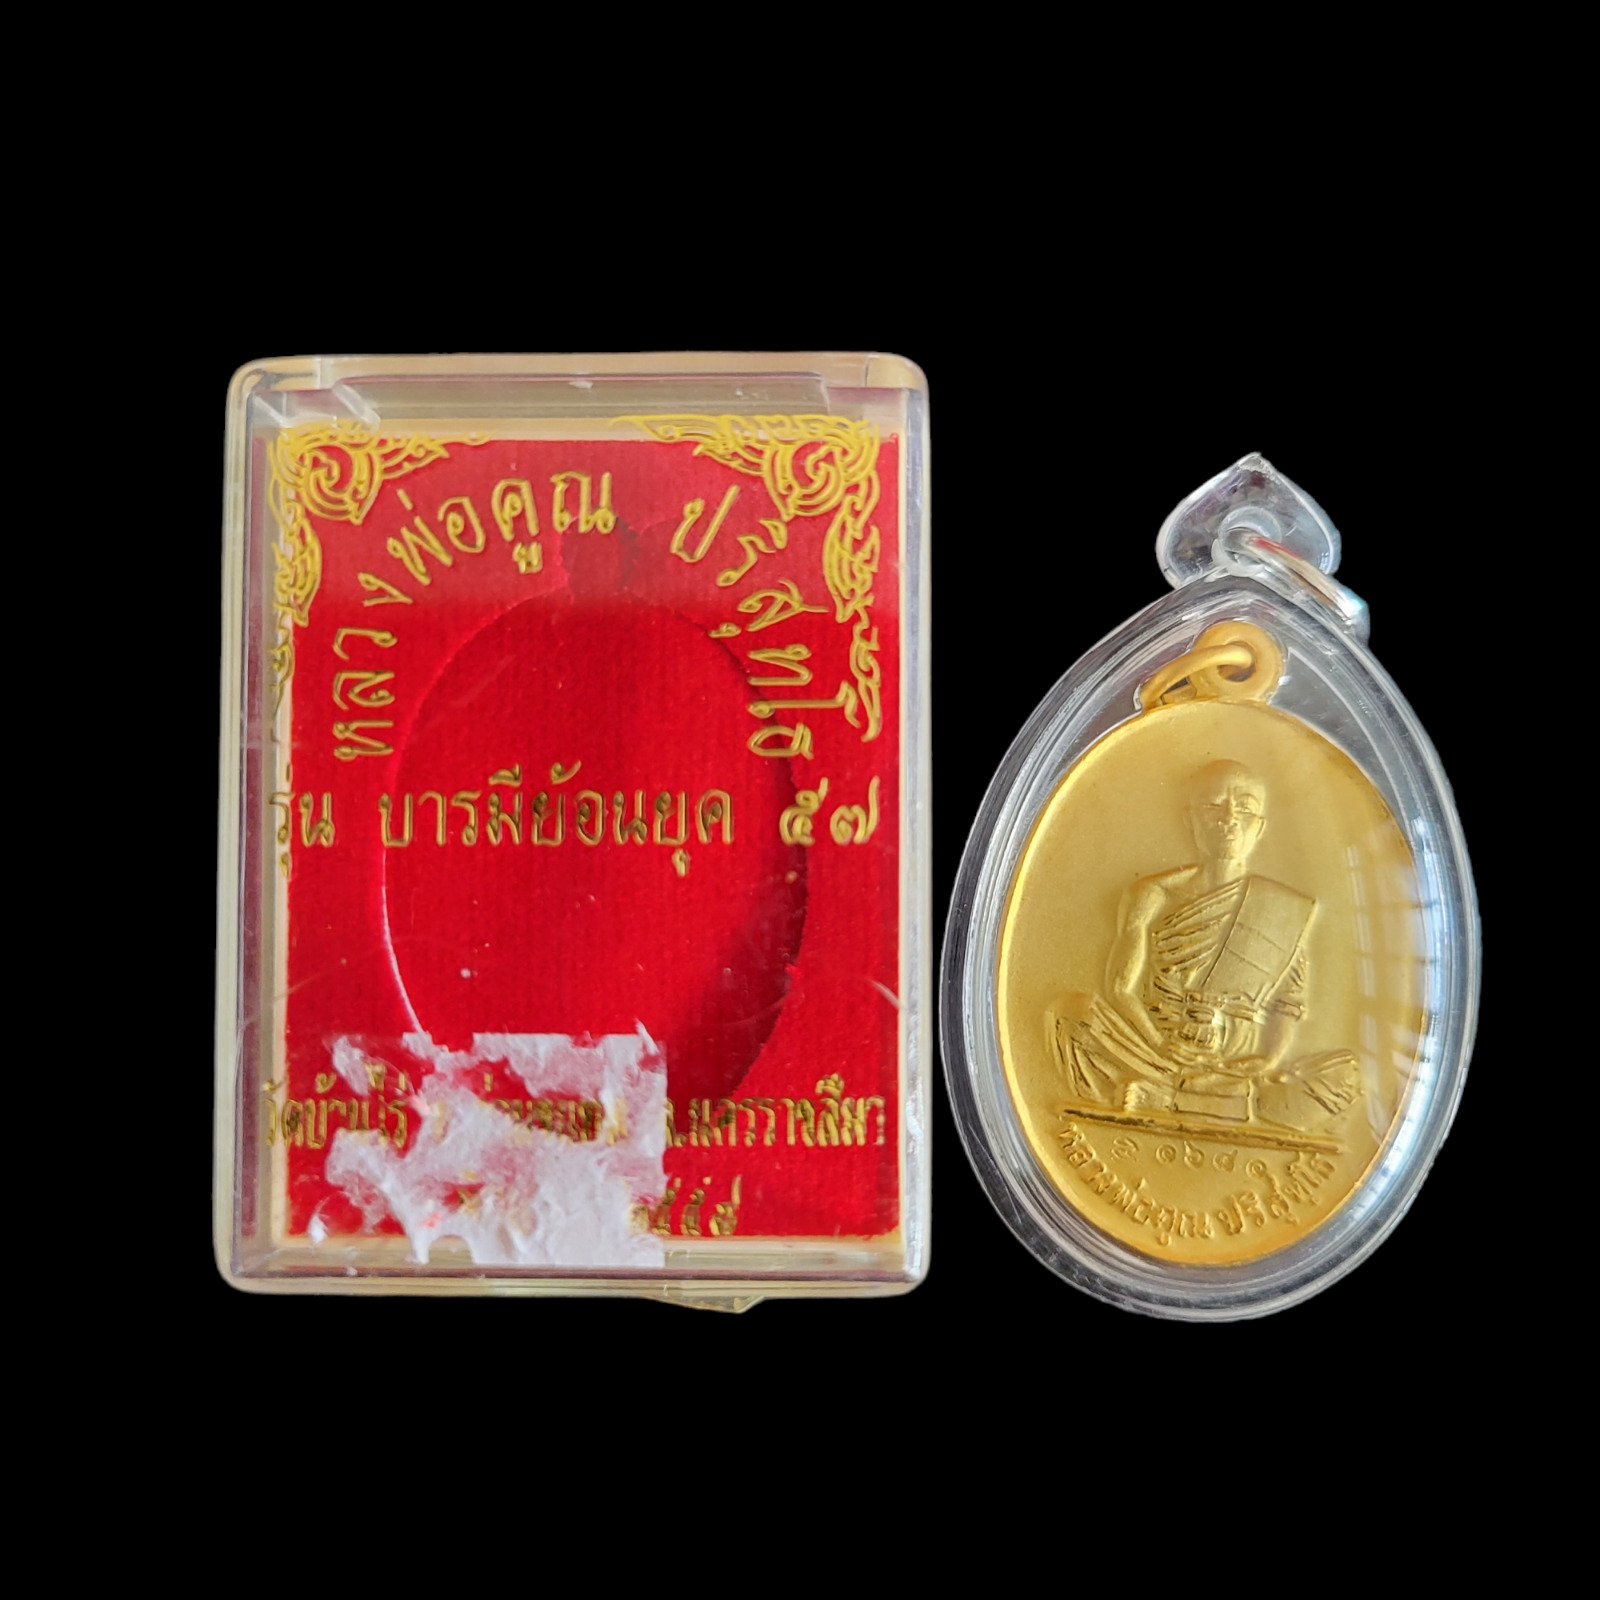 LP Koon Rian Samakit 91 Baramee Kalaithong Satin Waterproof casing Thai Amulet